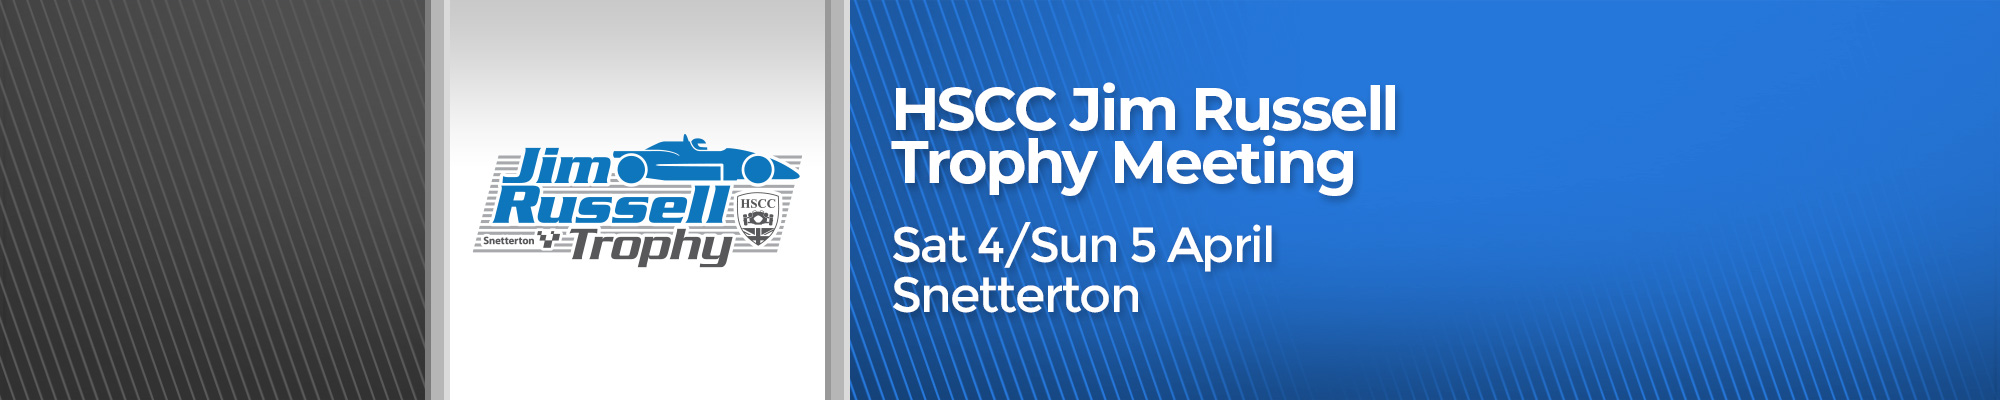 HSCC Jim Russell Trophy - POSTPONED